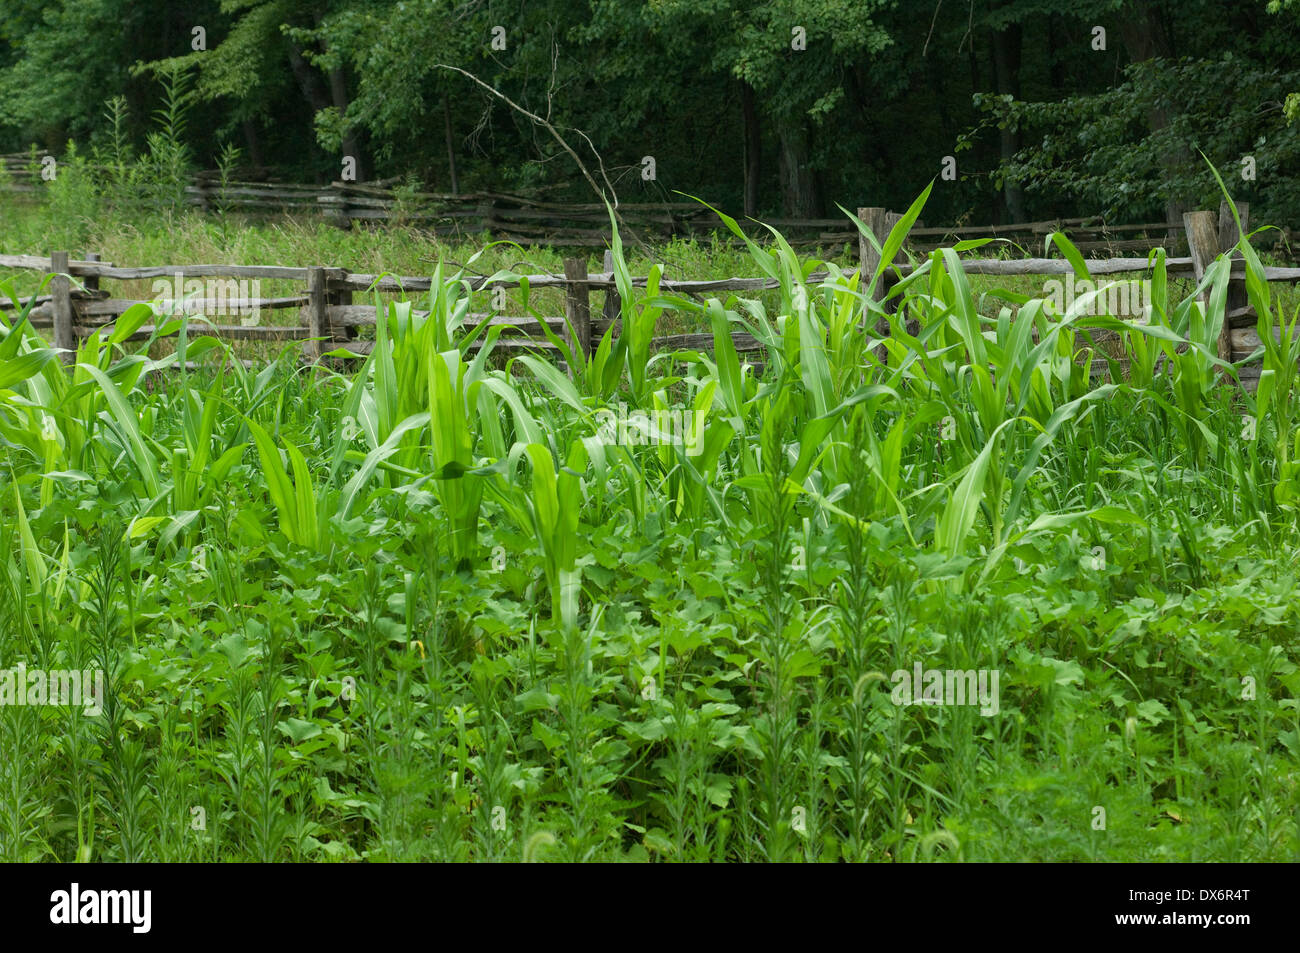 Crops growing at Lincoln Boyhood National Memorial, Indiana. Digital photograph Stock Photo